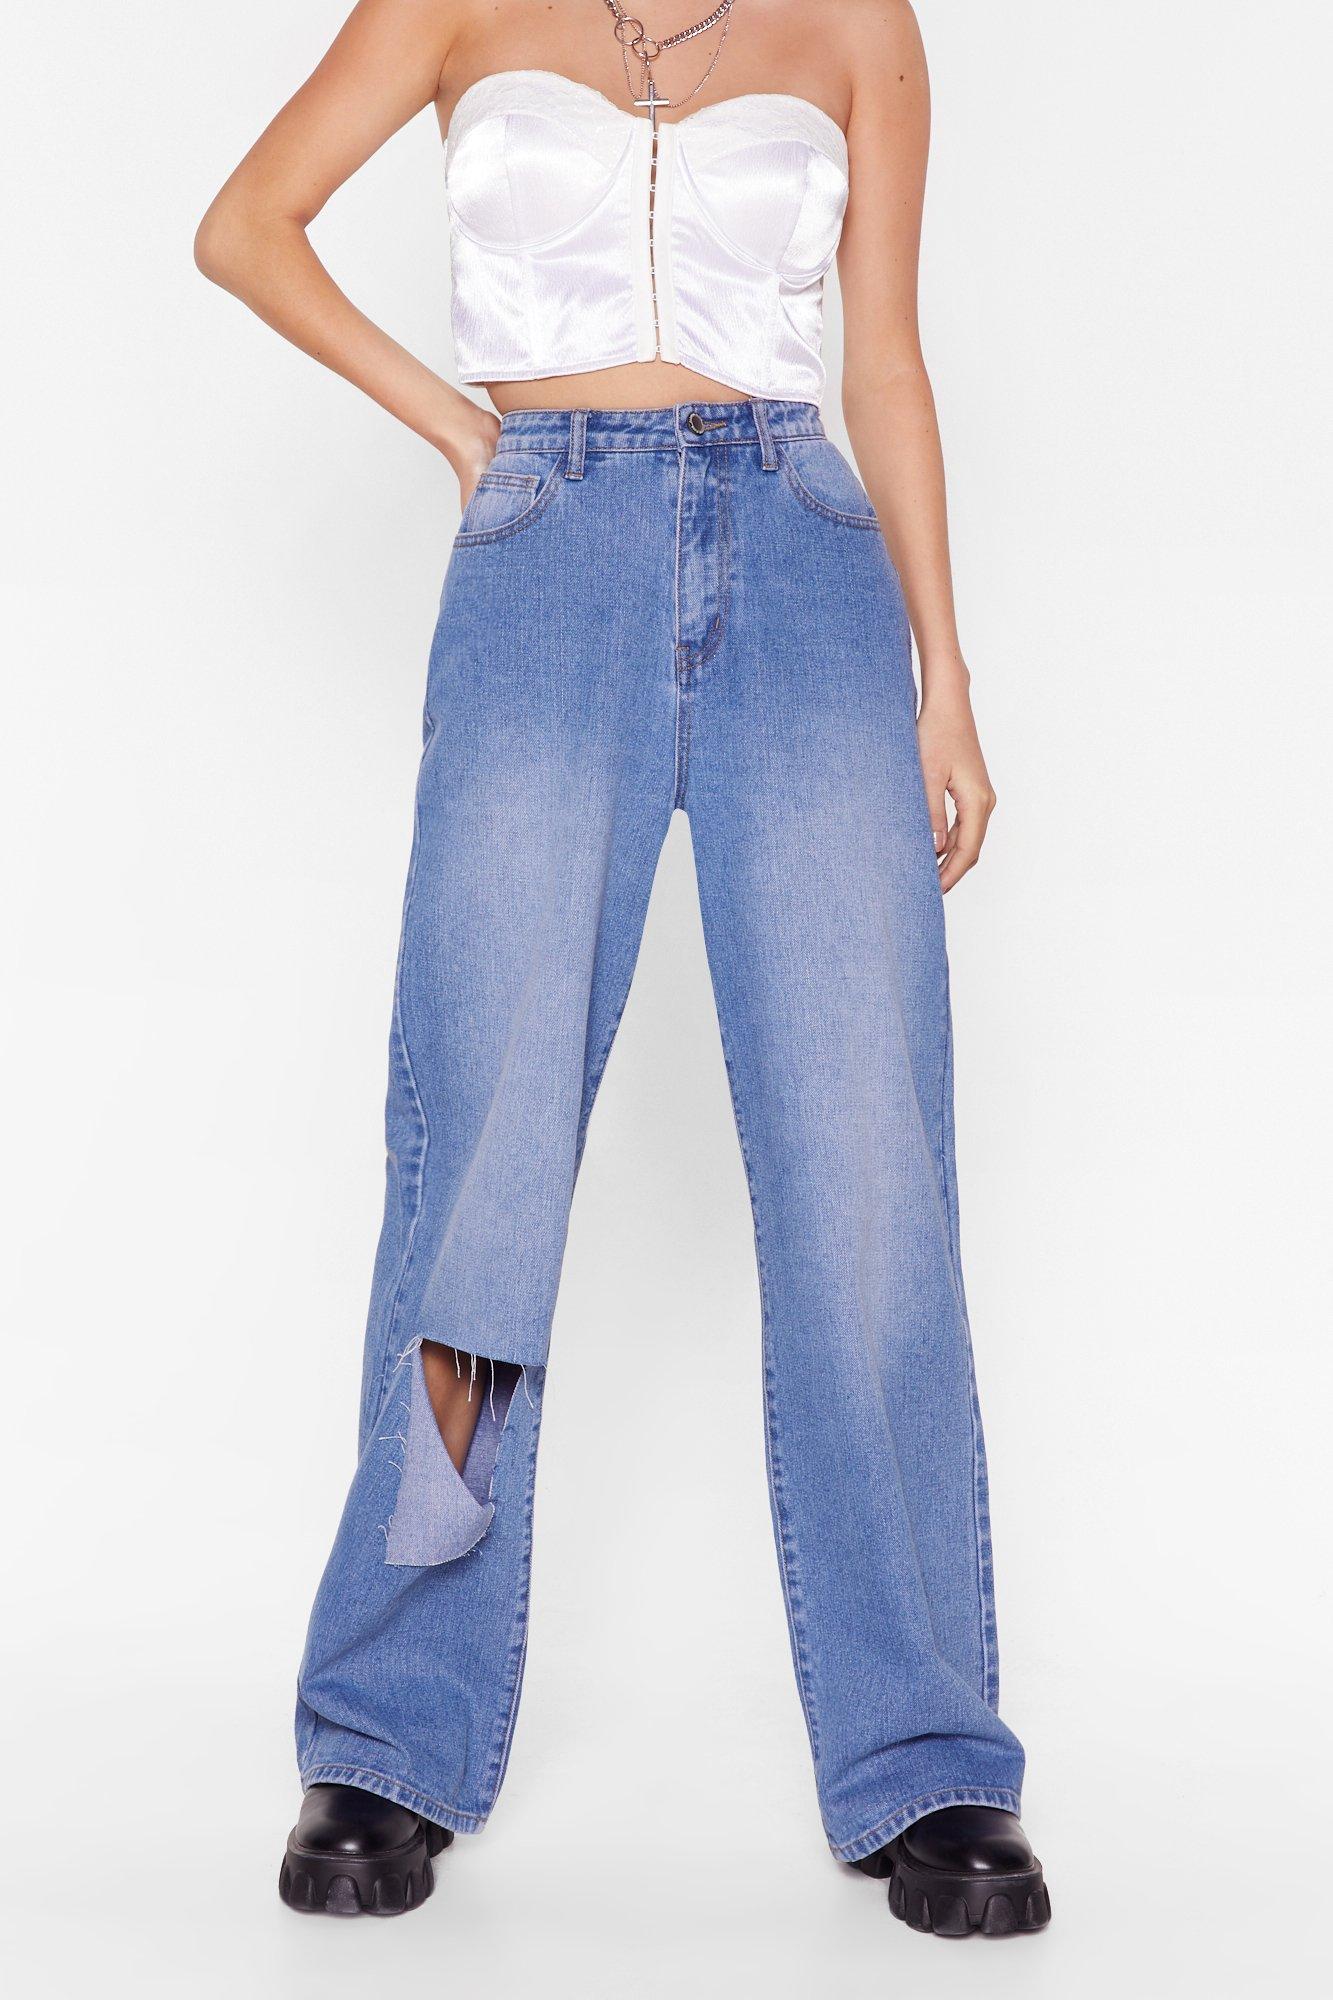 jaket jeans price